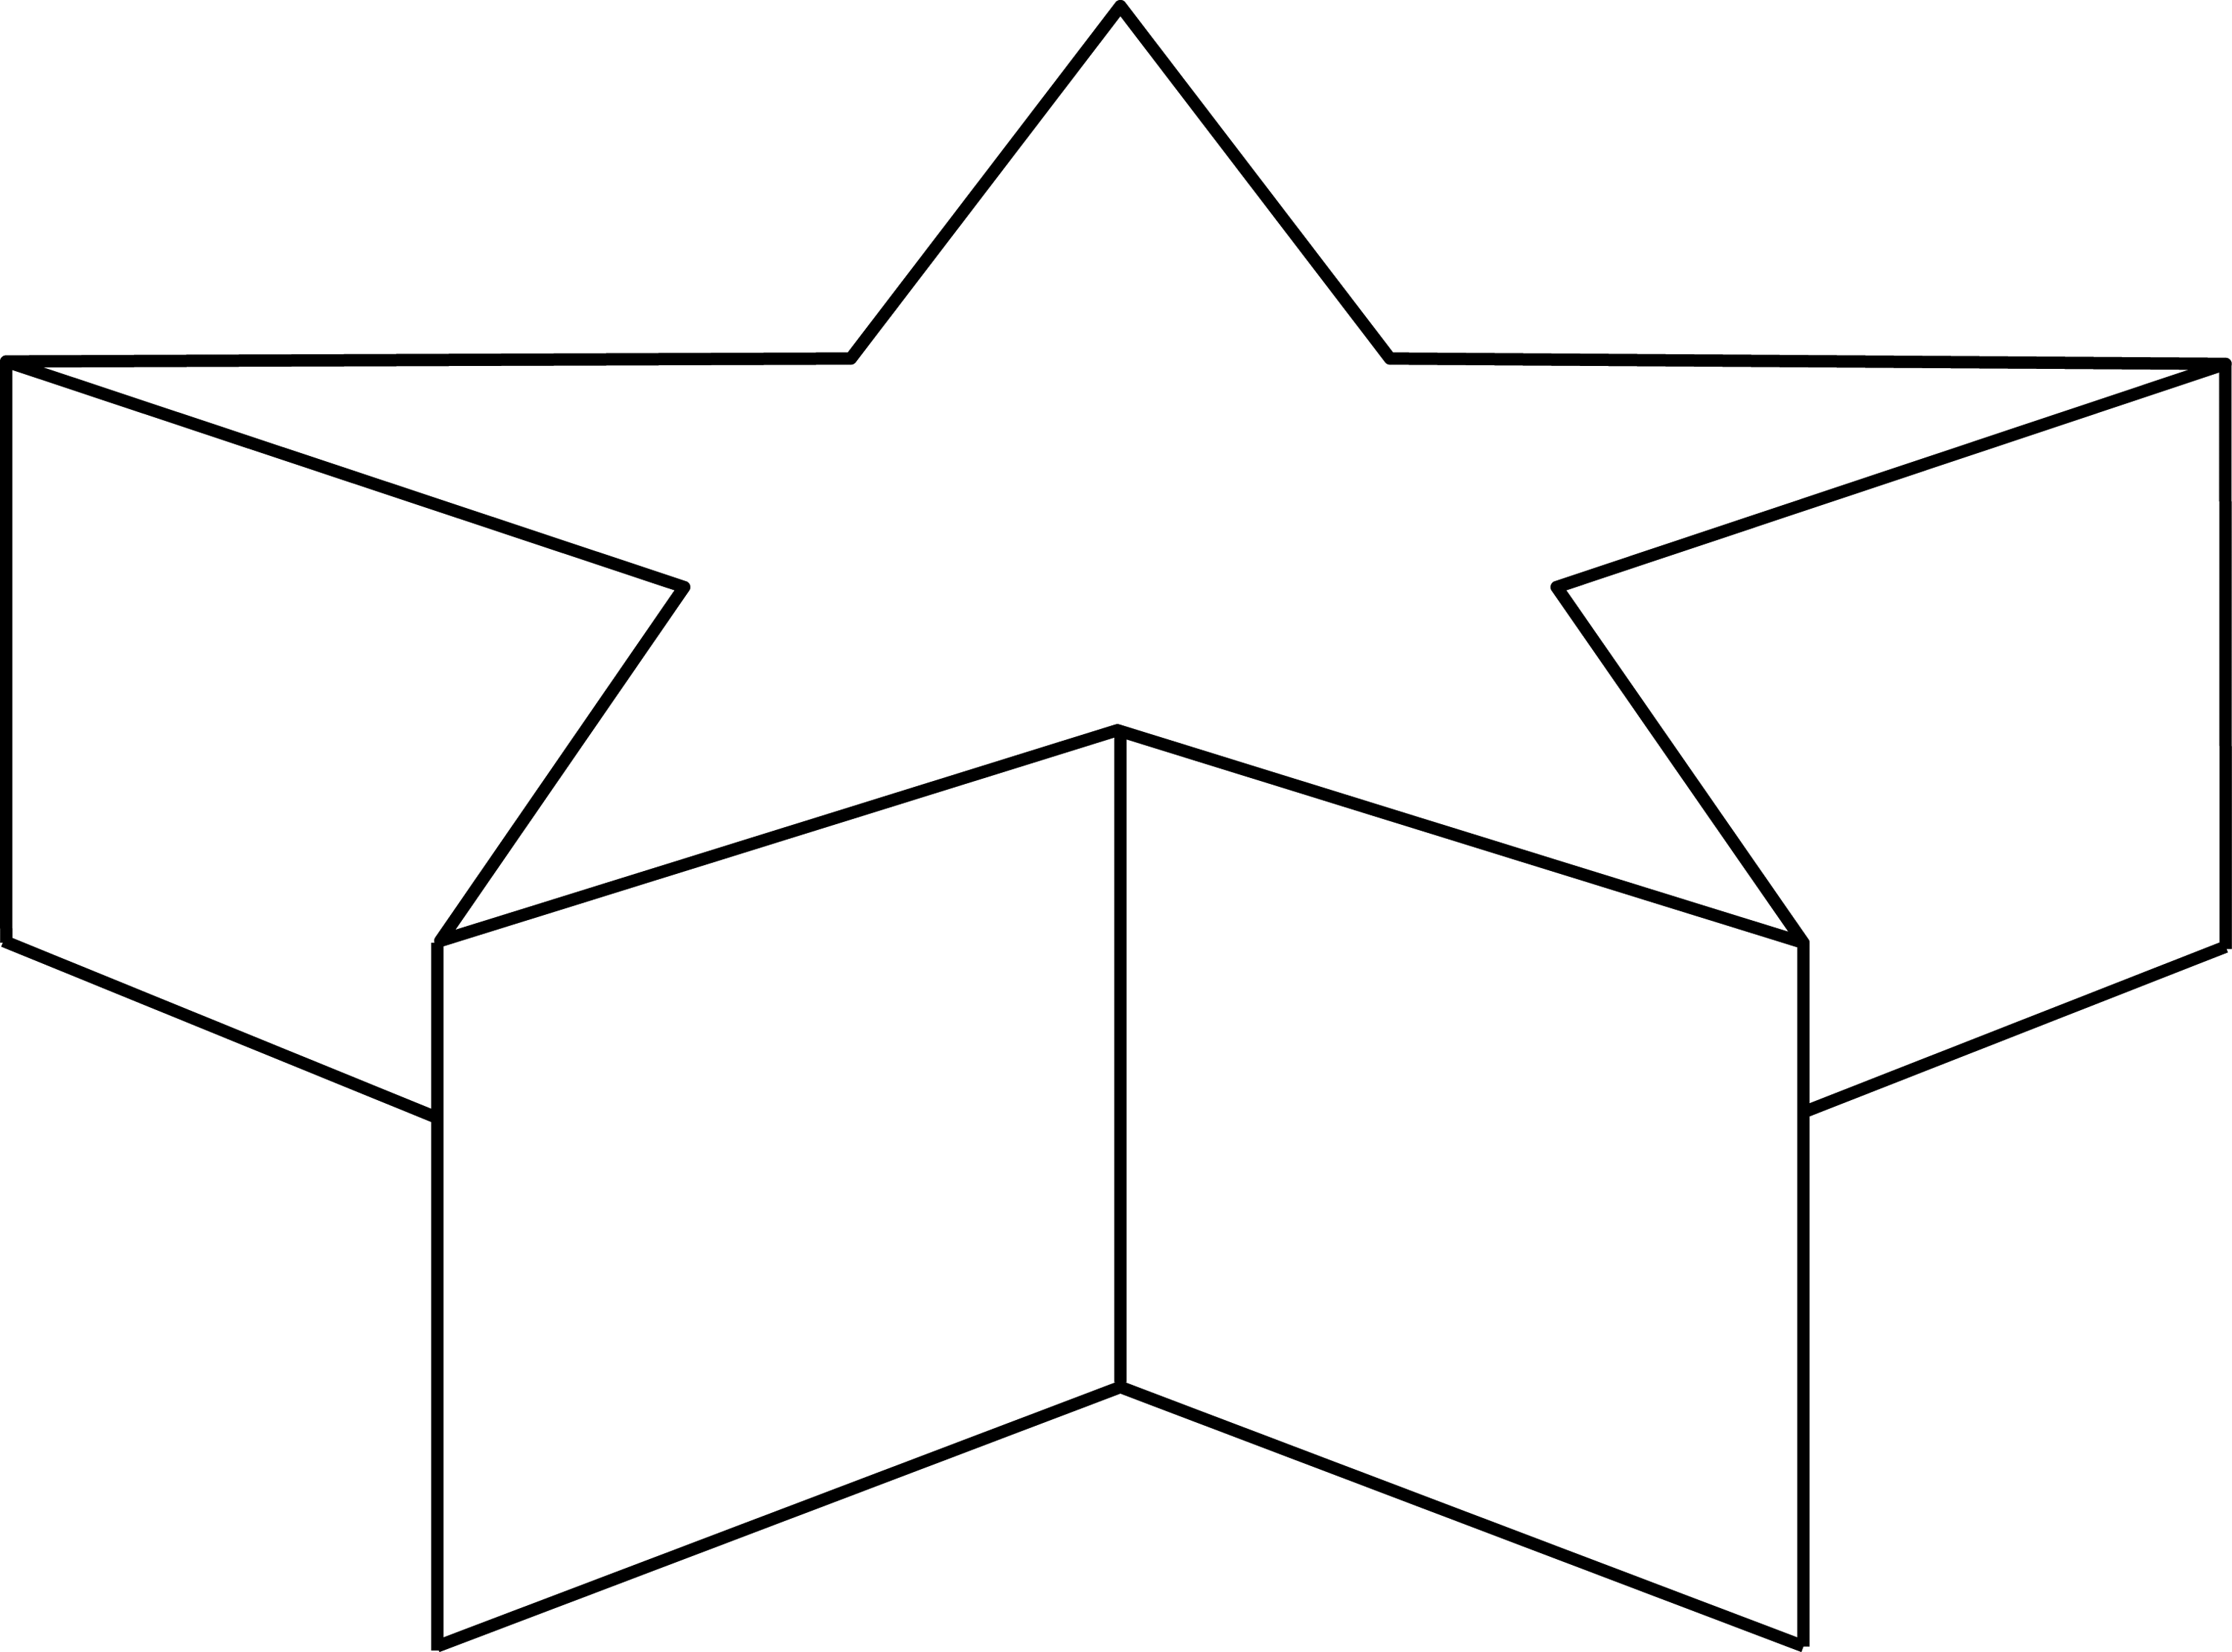 Star-Shaped Decagonal Prism | ClipArt ETC